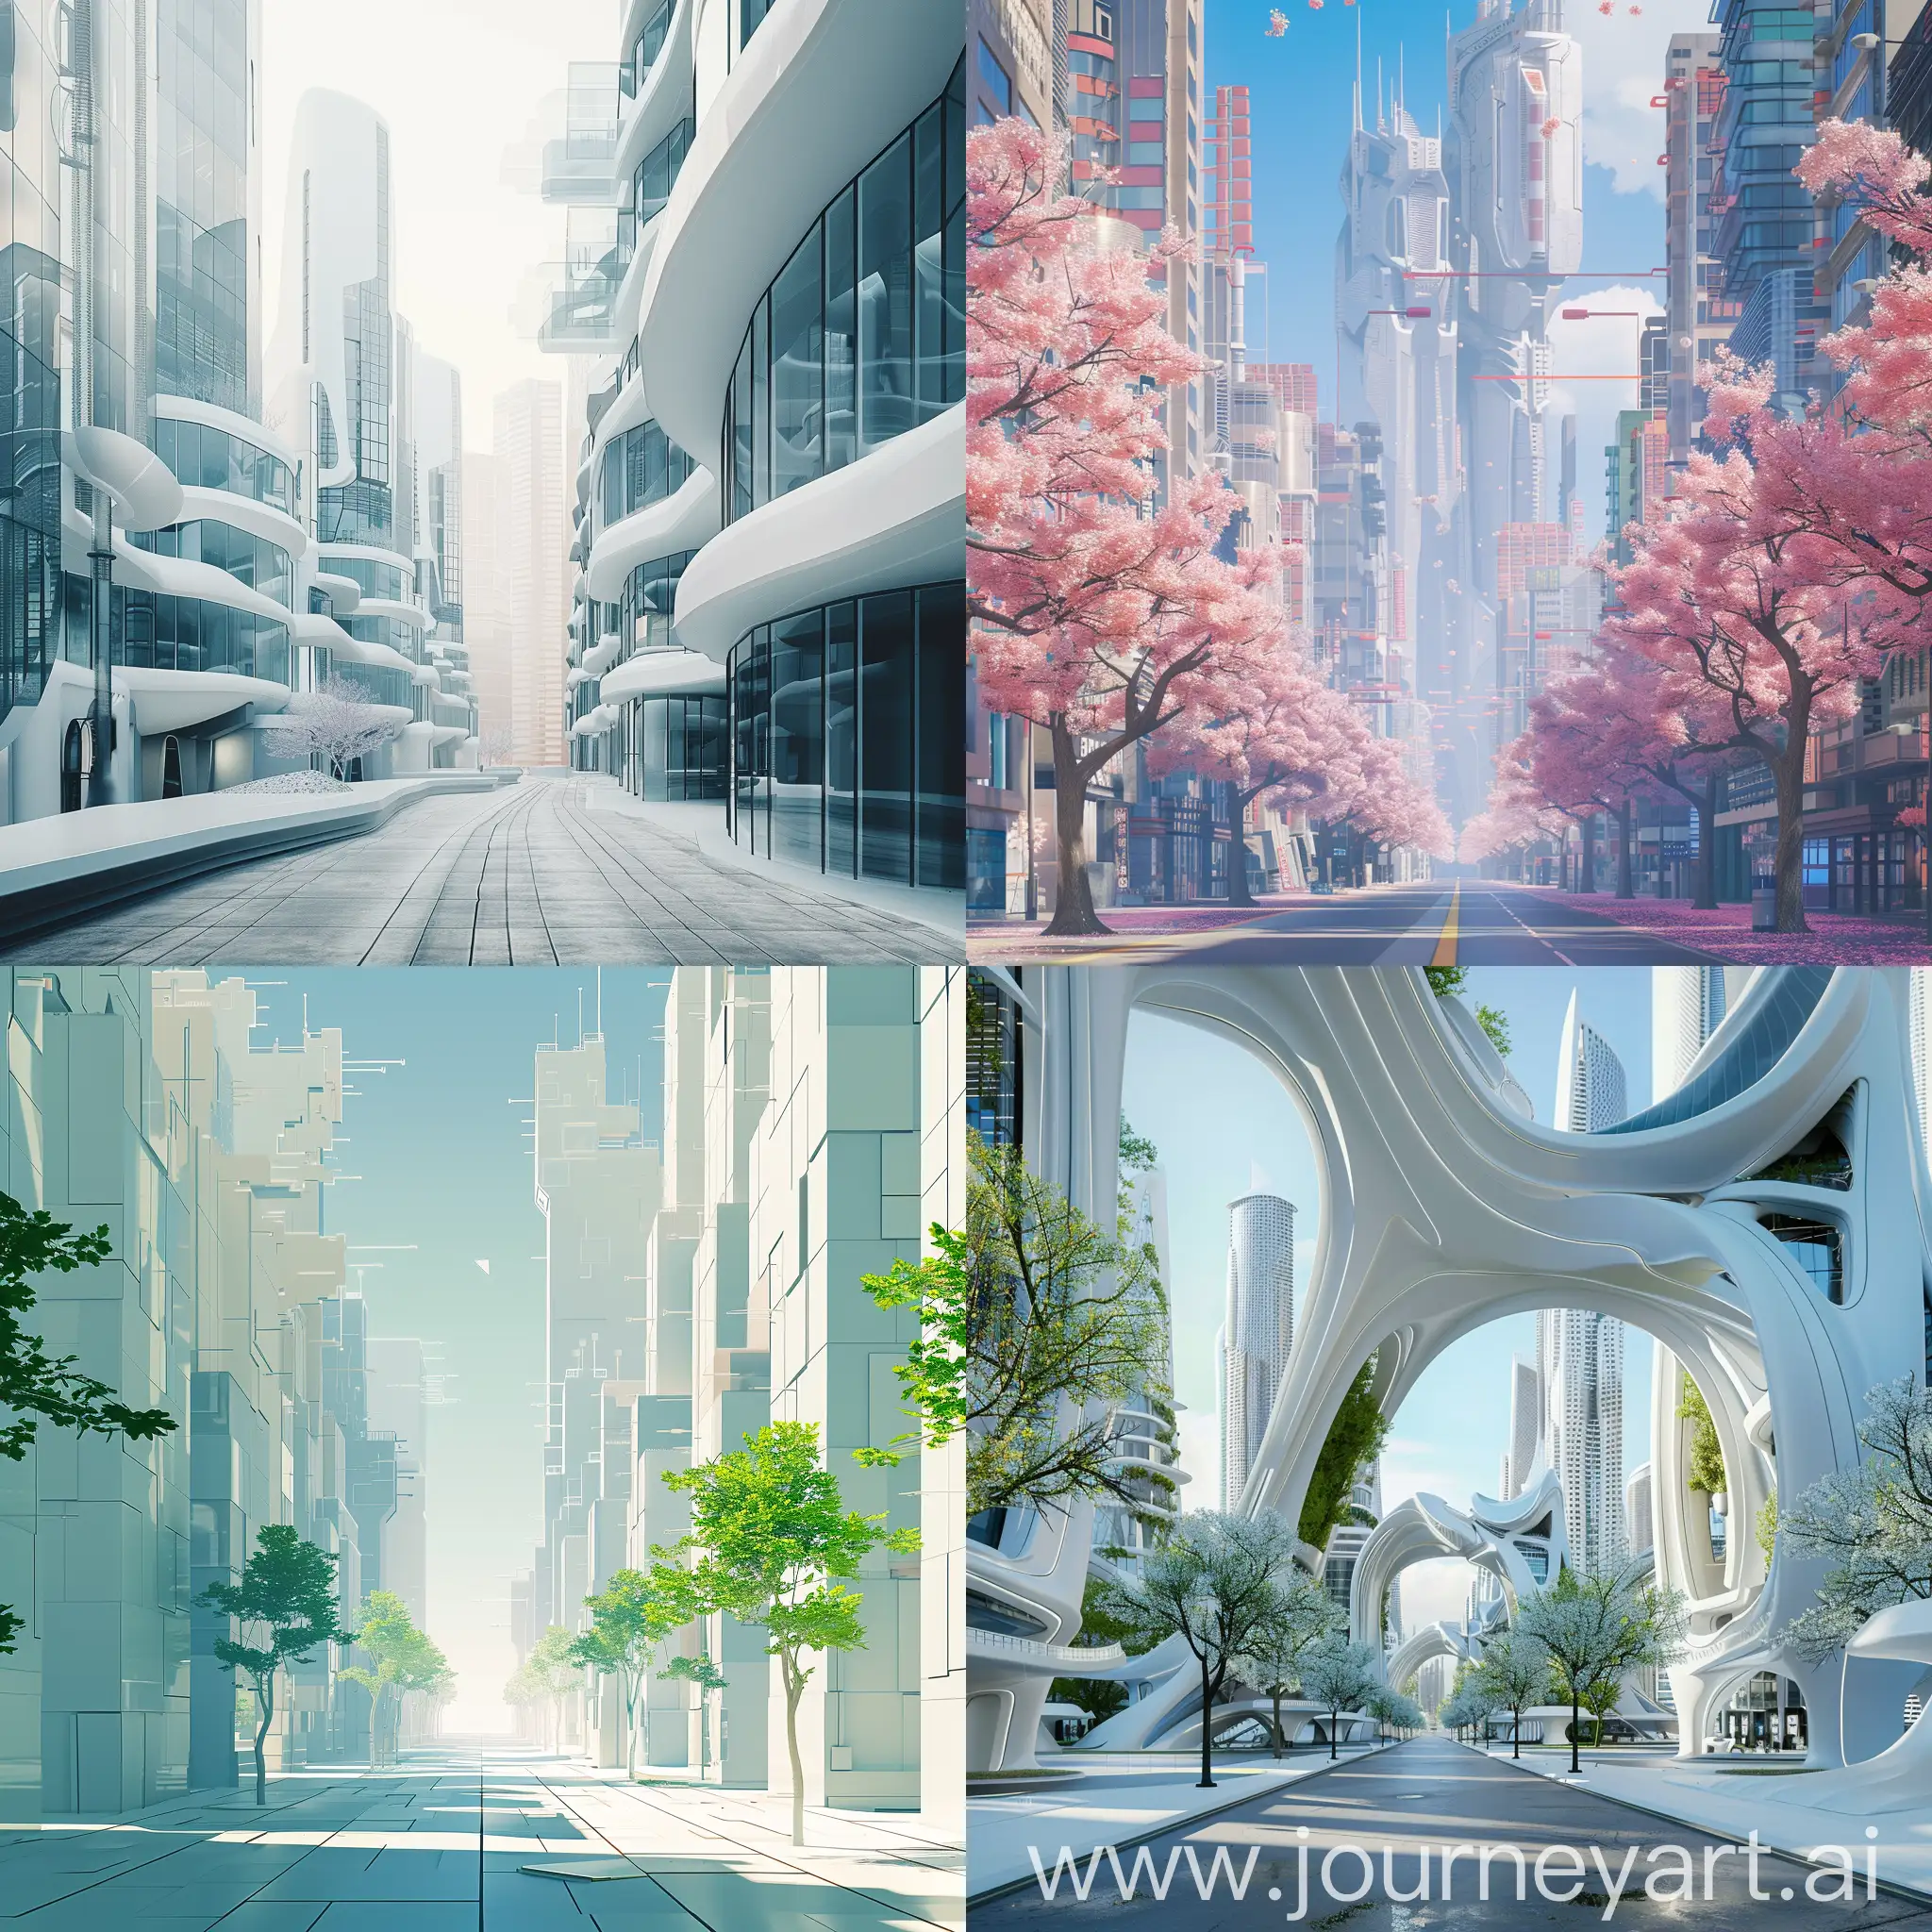 endless futuristic cityscape, beautiful surreal minimalist architecture, street level, spring